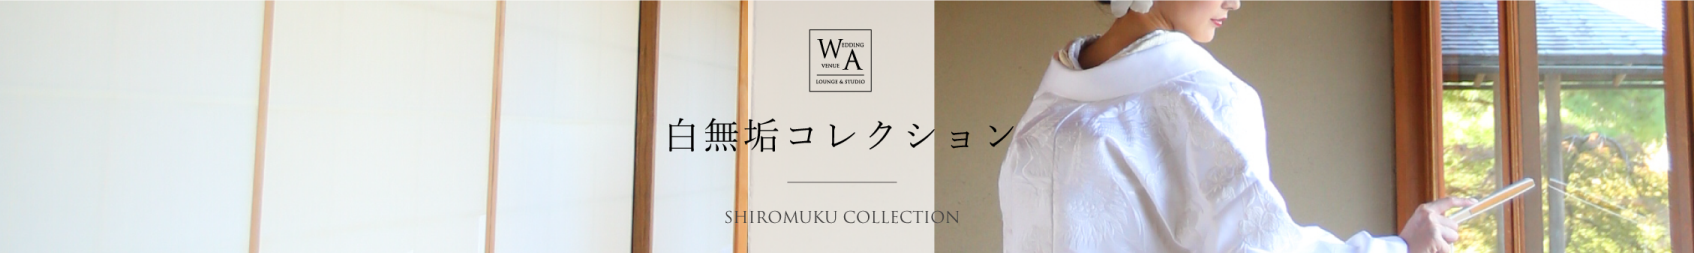 kimono collection ttl